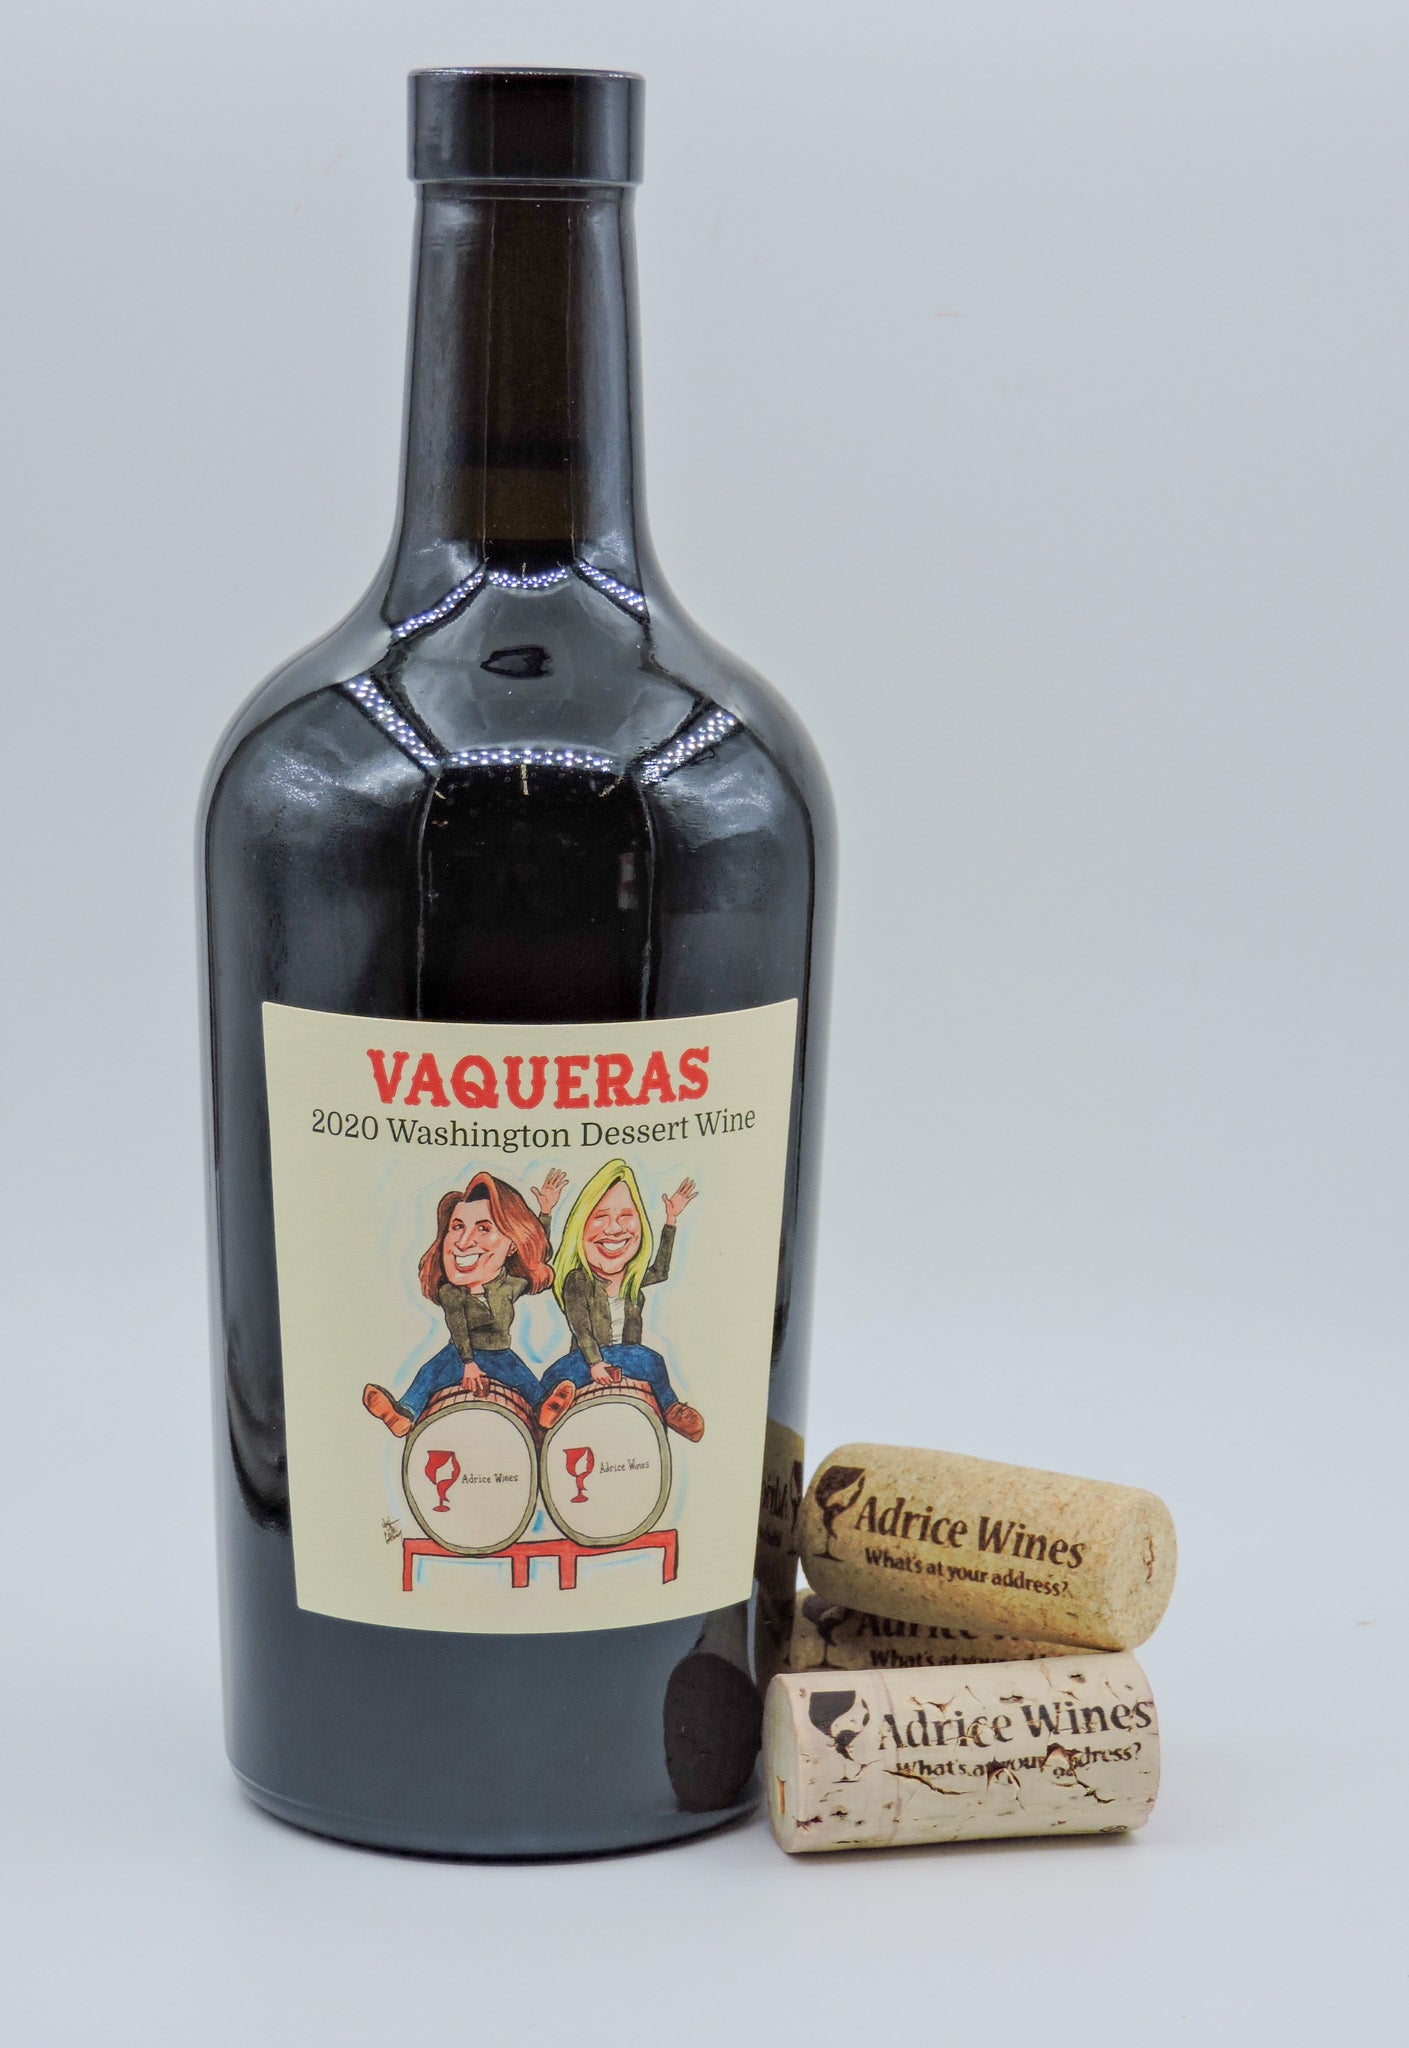 2020 Vaqueras Whiskey Barrel Washington Dessert Wine (500ml)